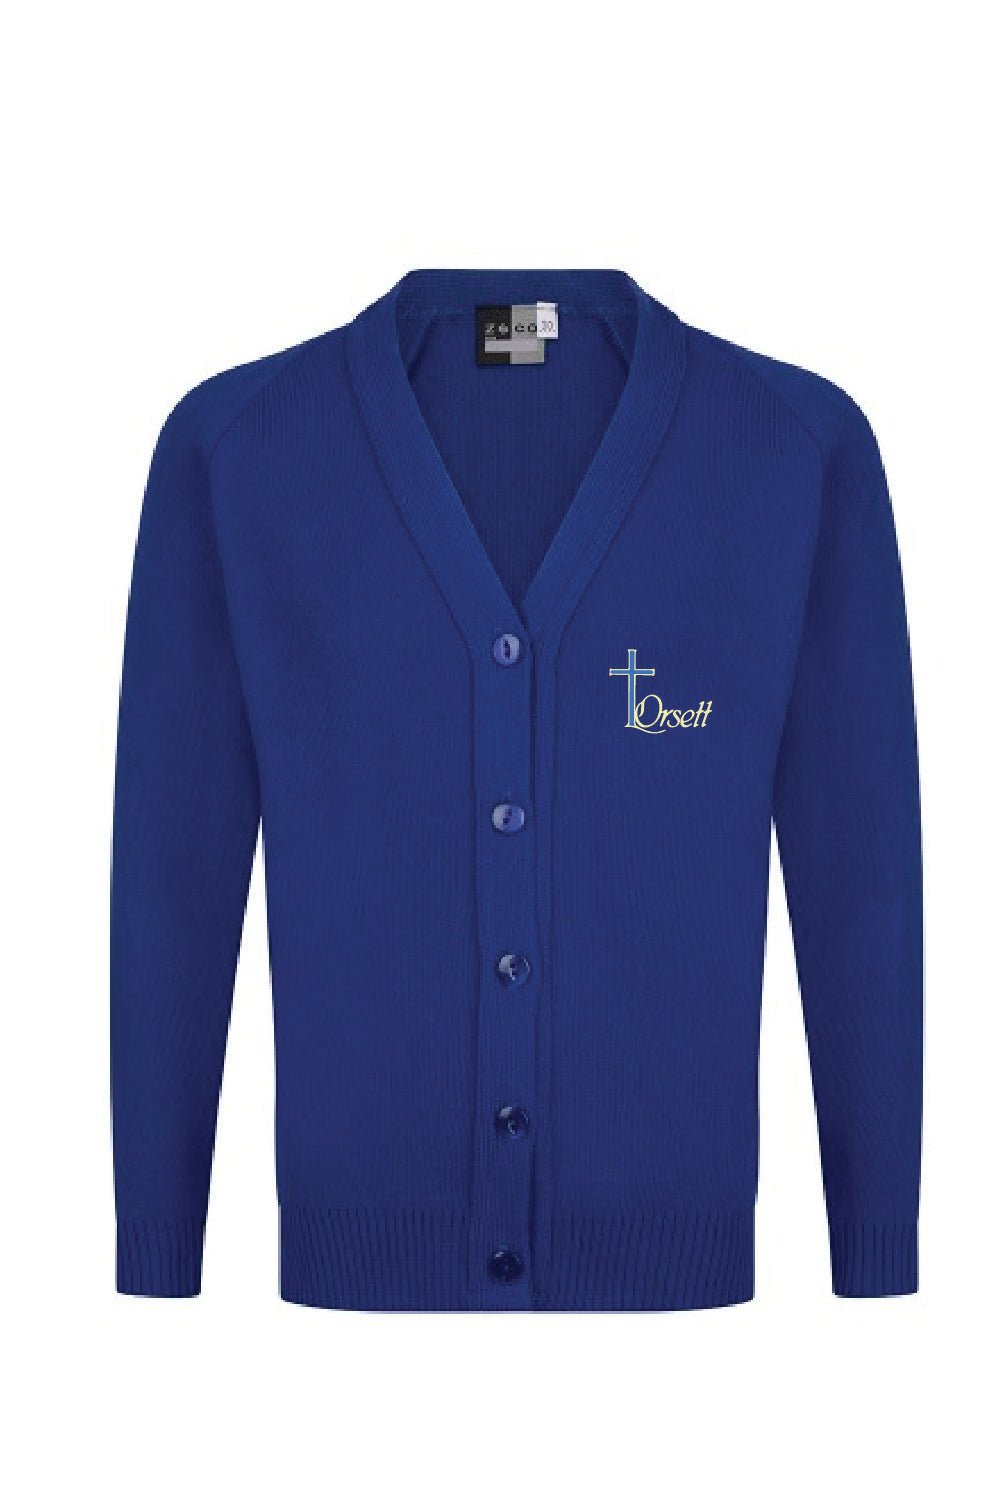 Orsett Primary Knitted Cardigan -new logo - Uniformwise Schoolwear